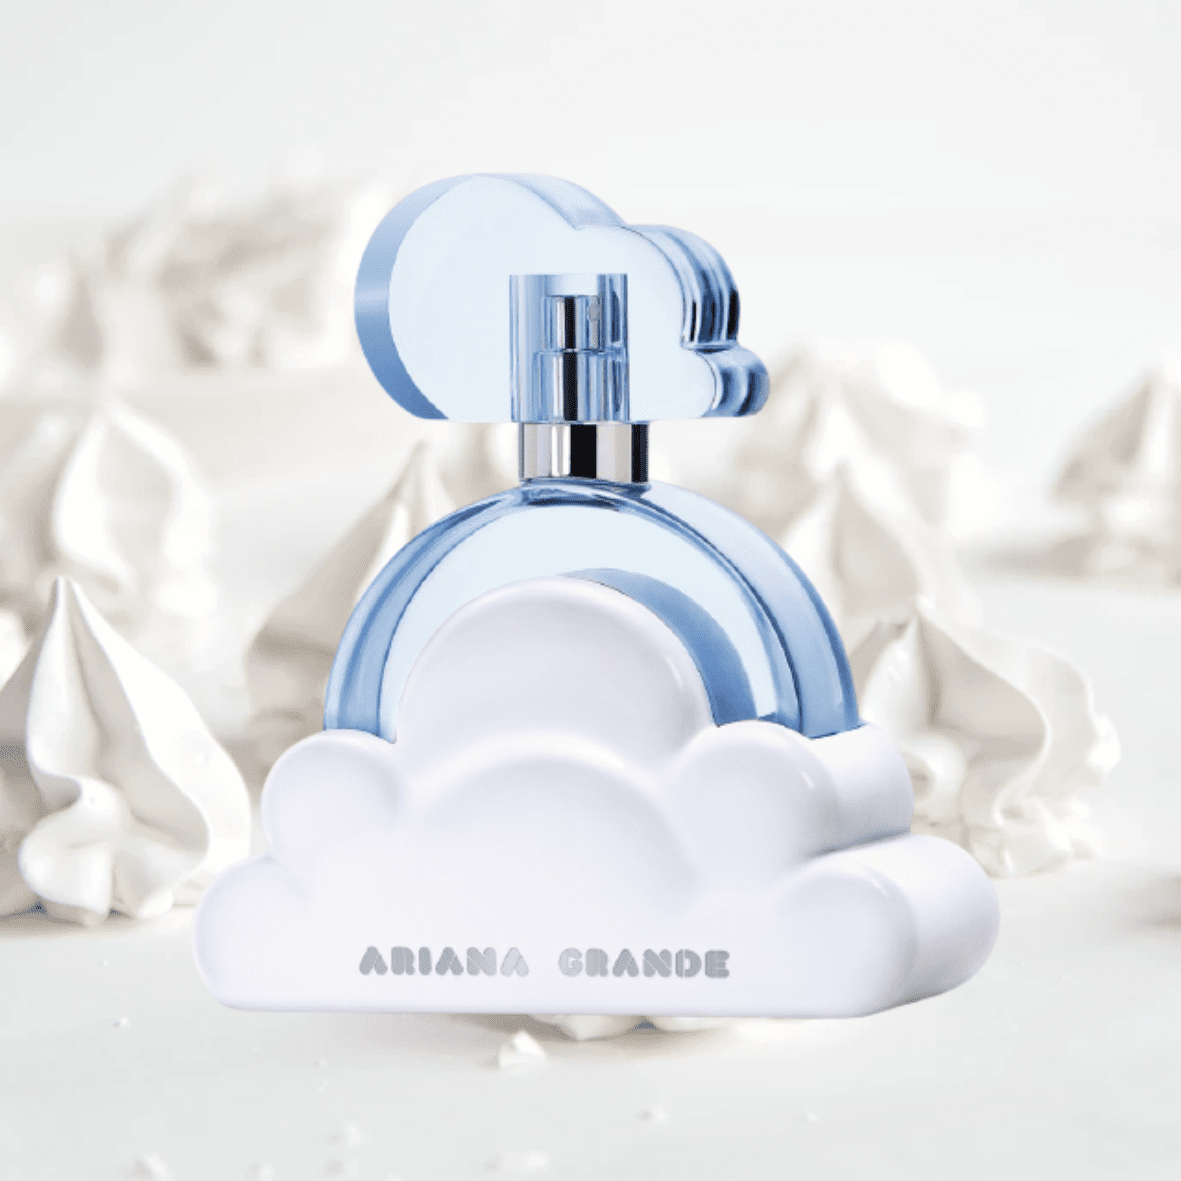 Ariana-grande-cloud EDP